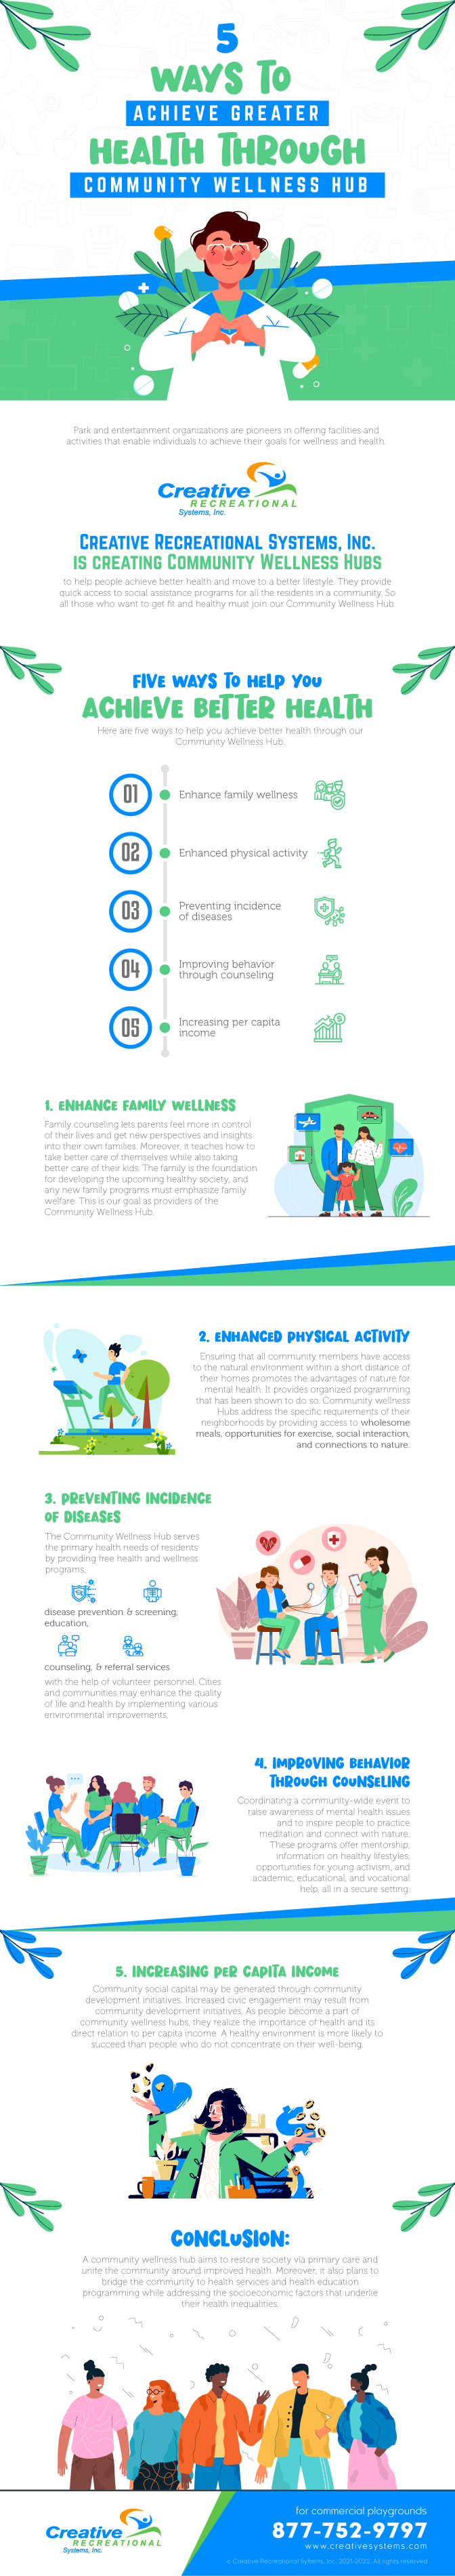 5-Ways-To-Achieve-Greater-Health-Through-Community-Wellness-Hub